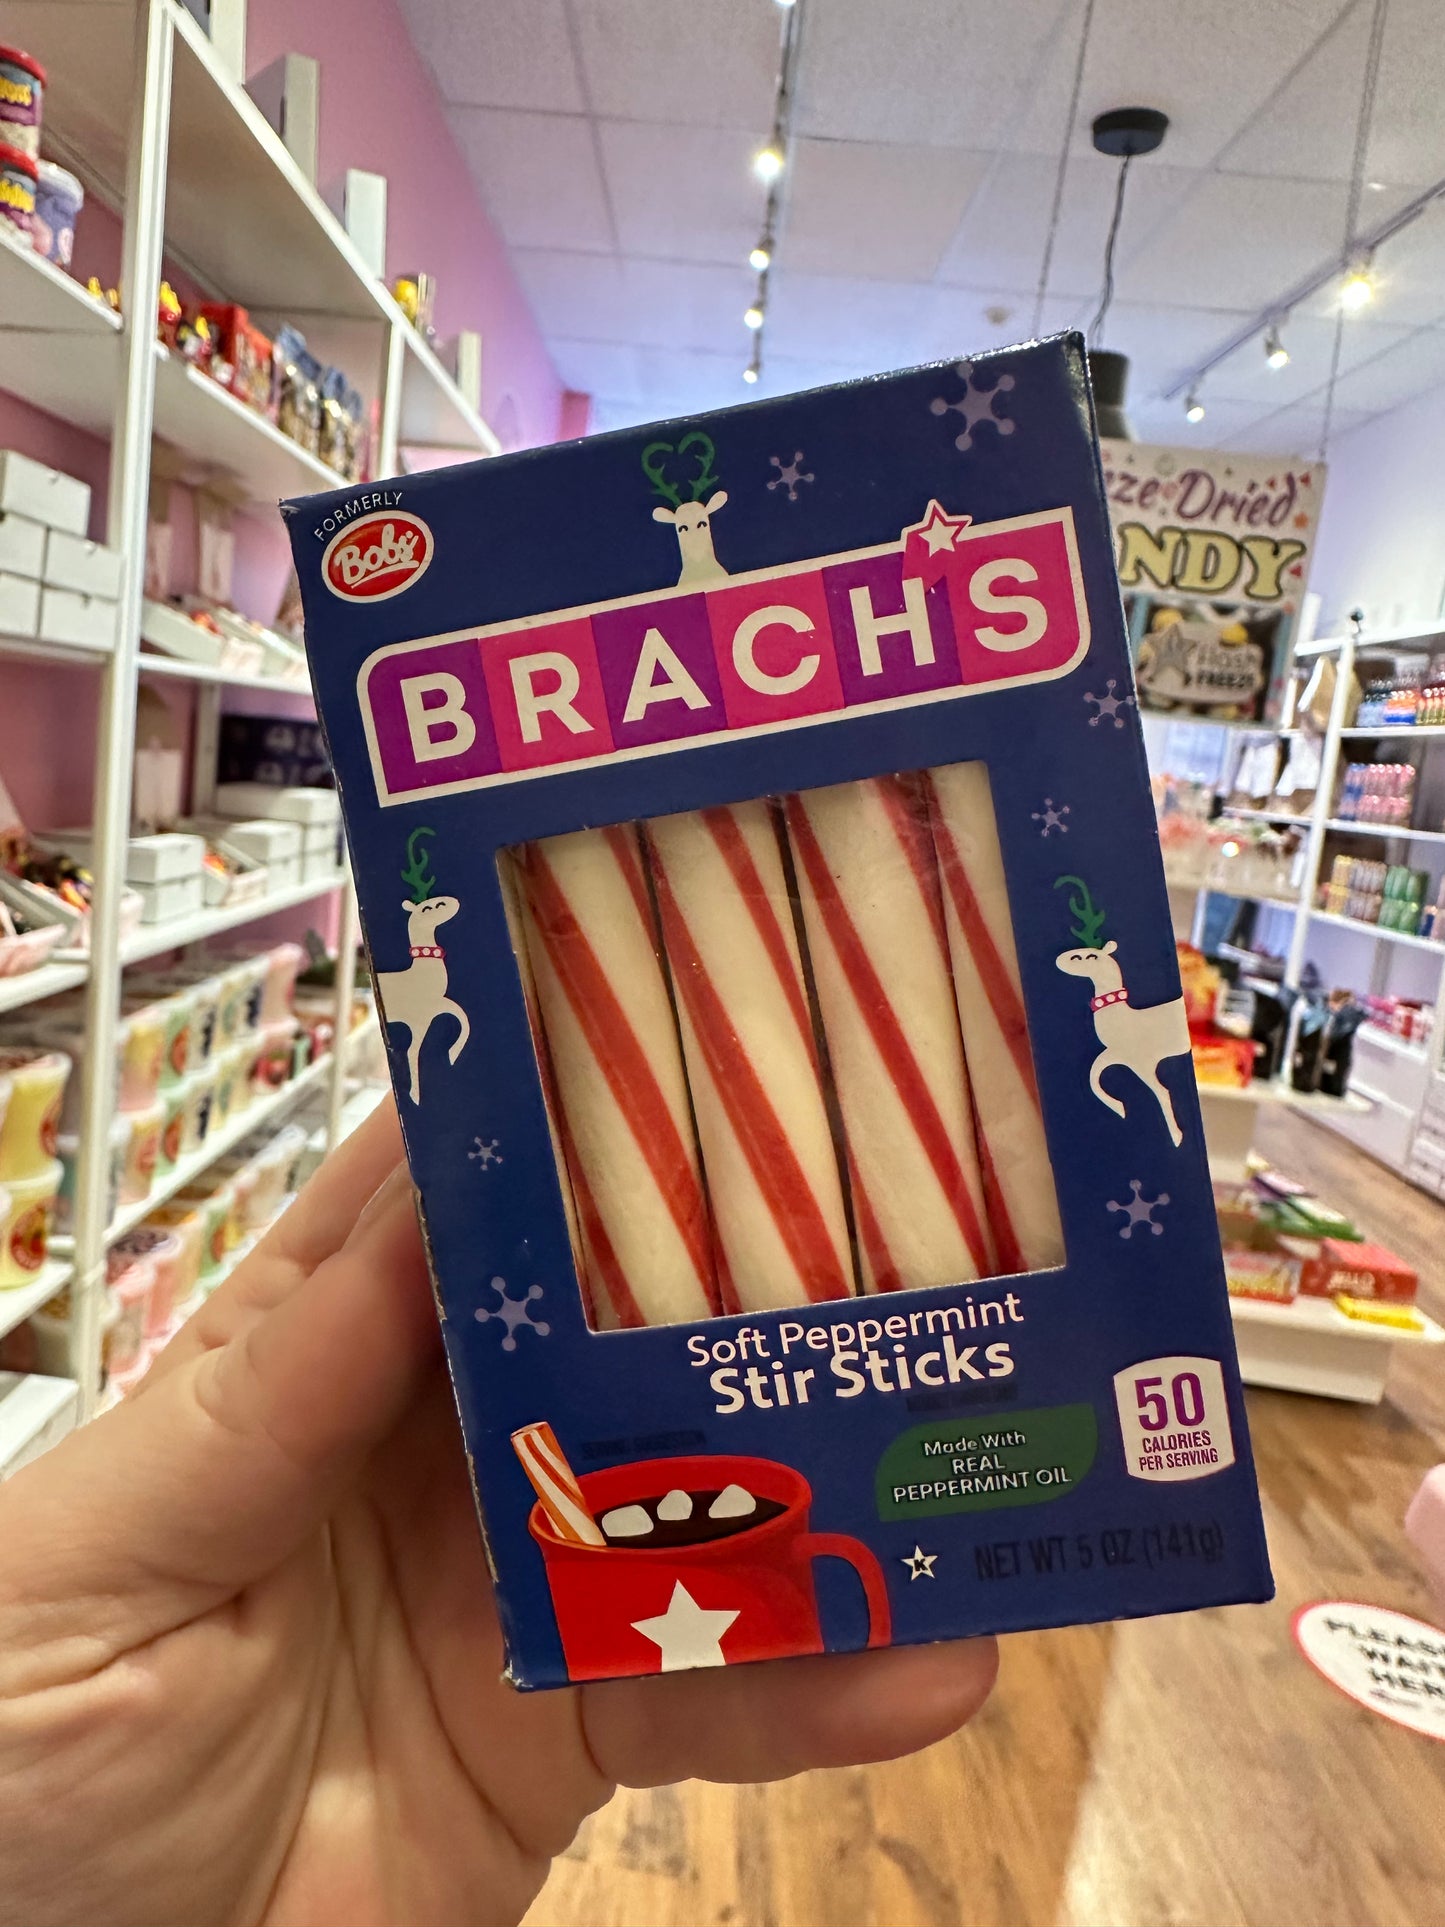 Brach’s Soft Peppermint Stir Sticks